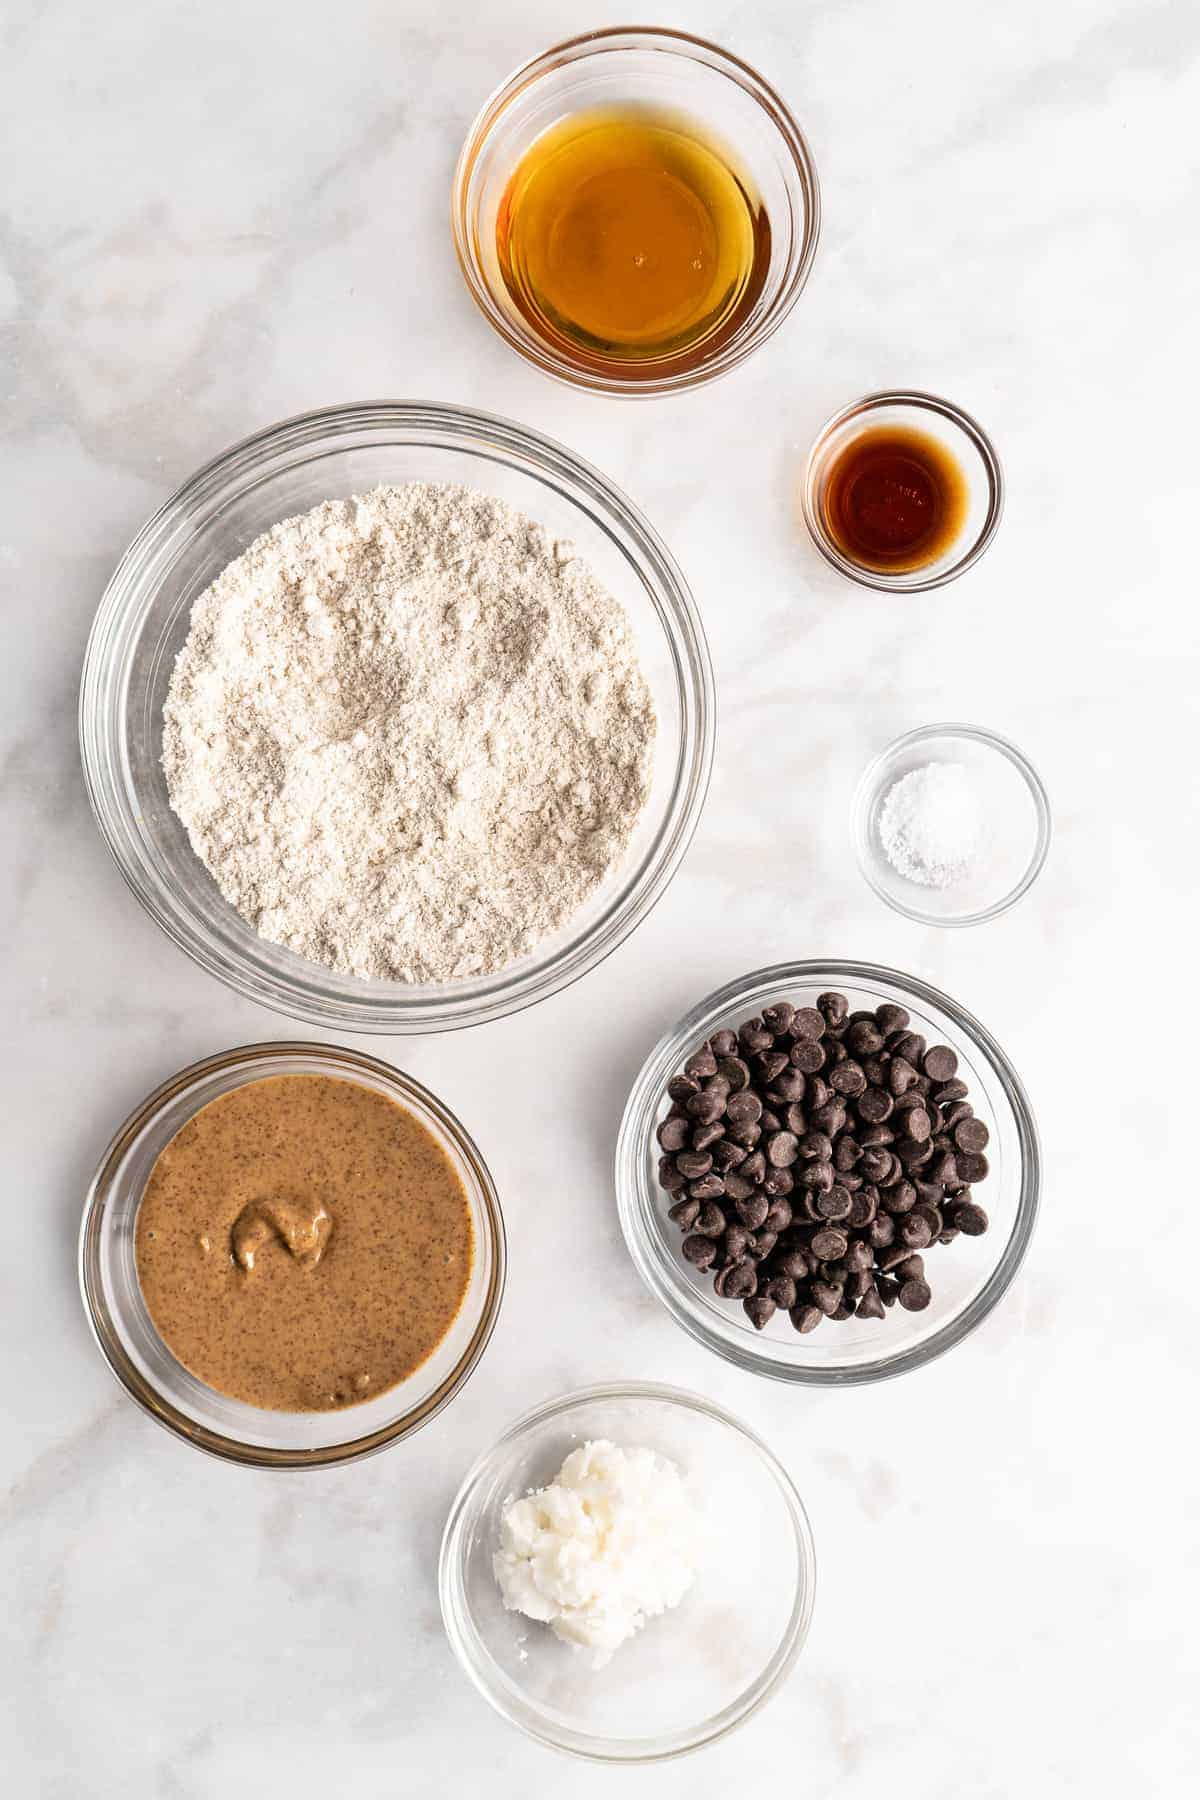 Overhead view of edible vegan chocolate chip cookie dough ingredients